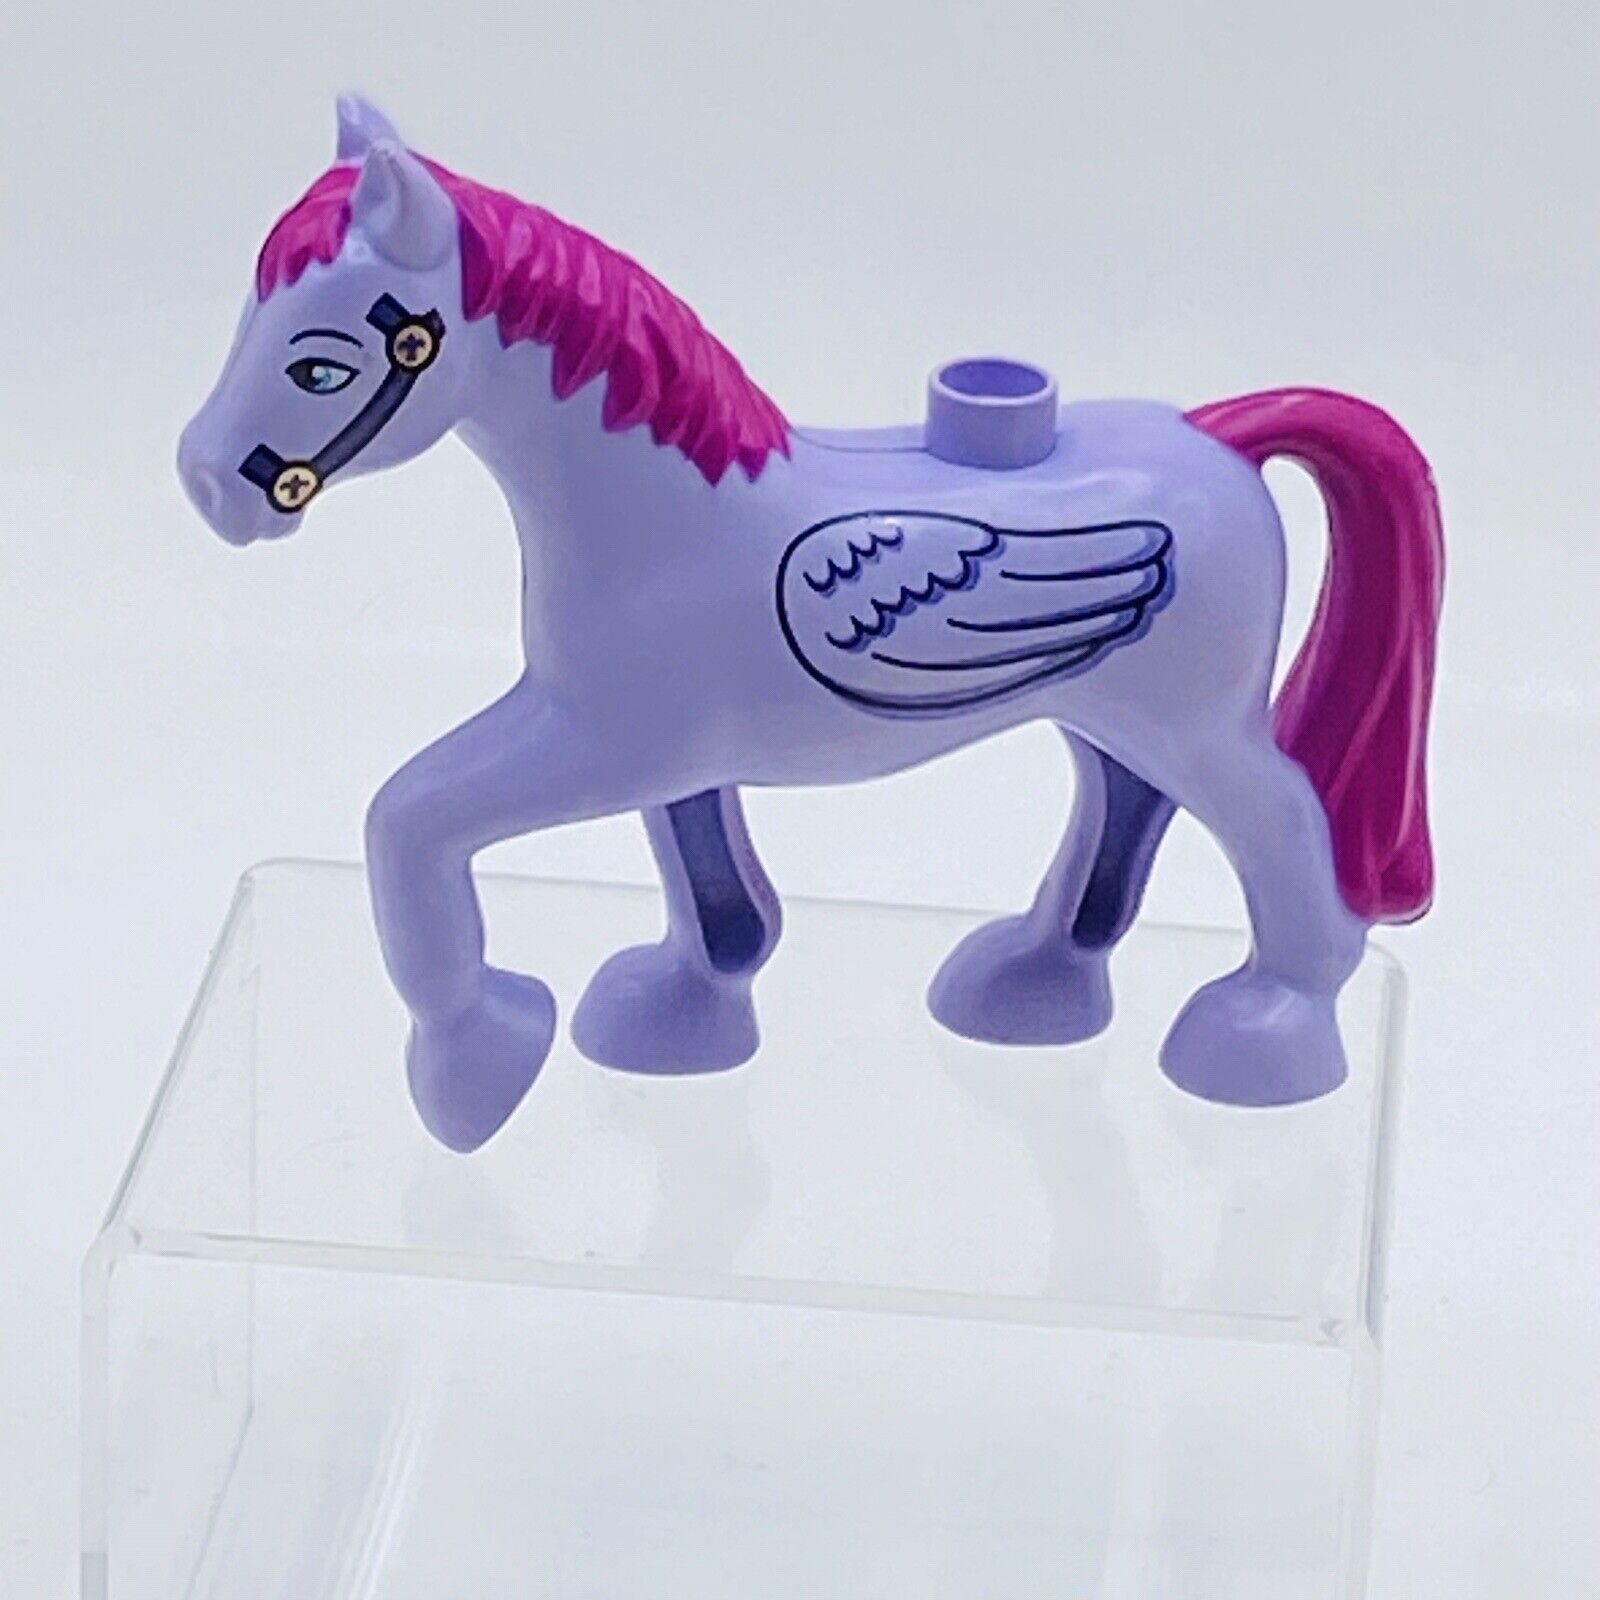 Lego Duplo PURPLE FLYING HORSE PEGASUS Royal Castle Pony 10594 Sofia's Stable